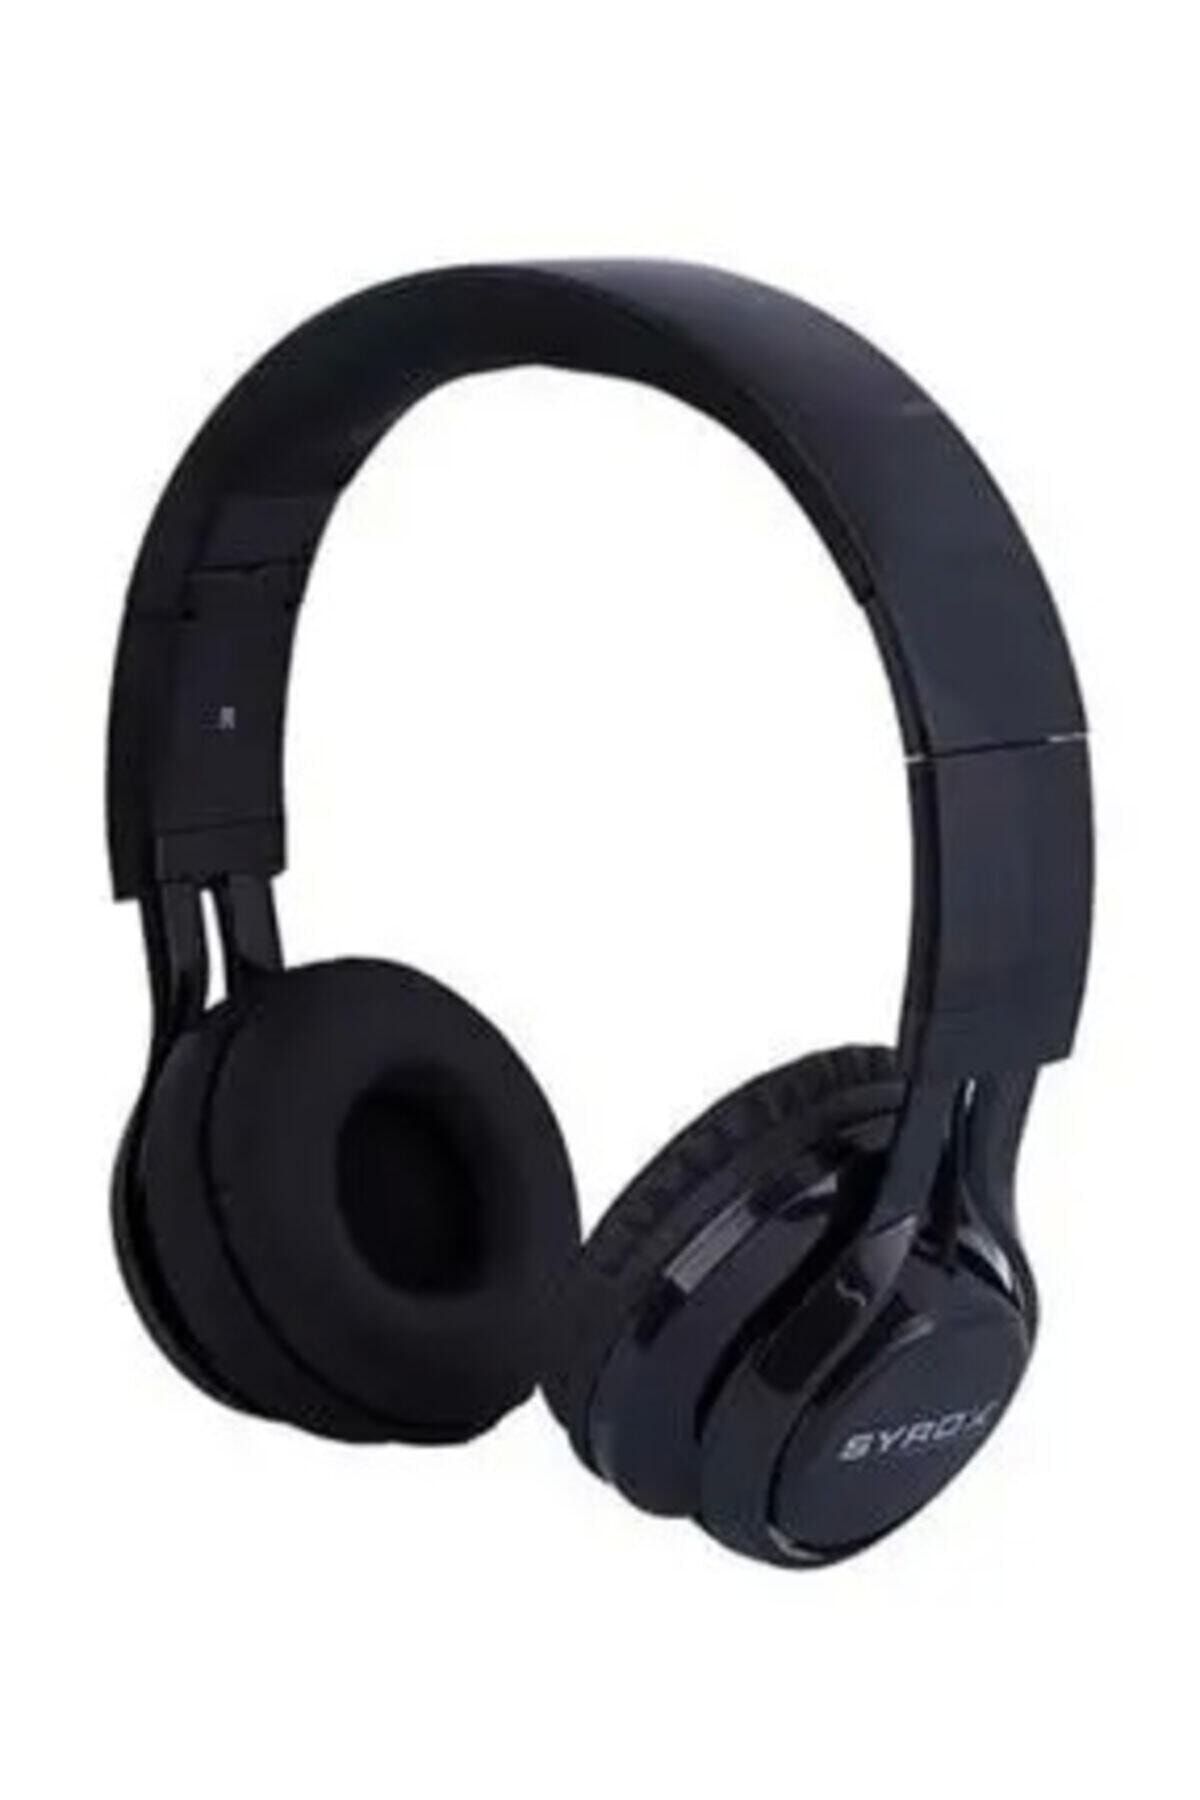 Syrox Xx-47 Siyah K11 Mikrofonlu Stereo Kablolu Kulak Üstü Kulaklık